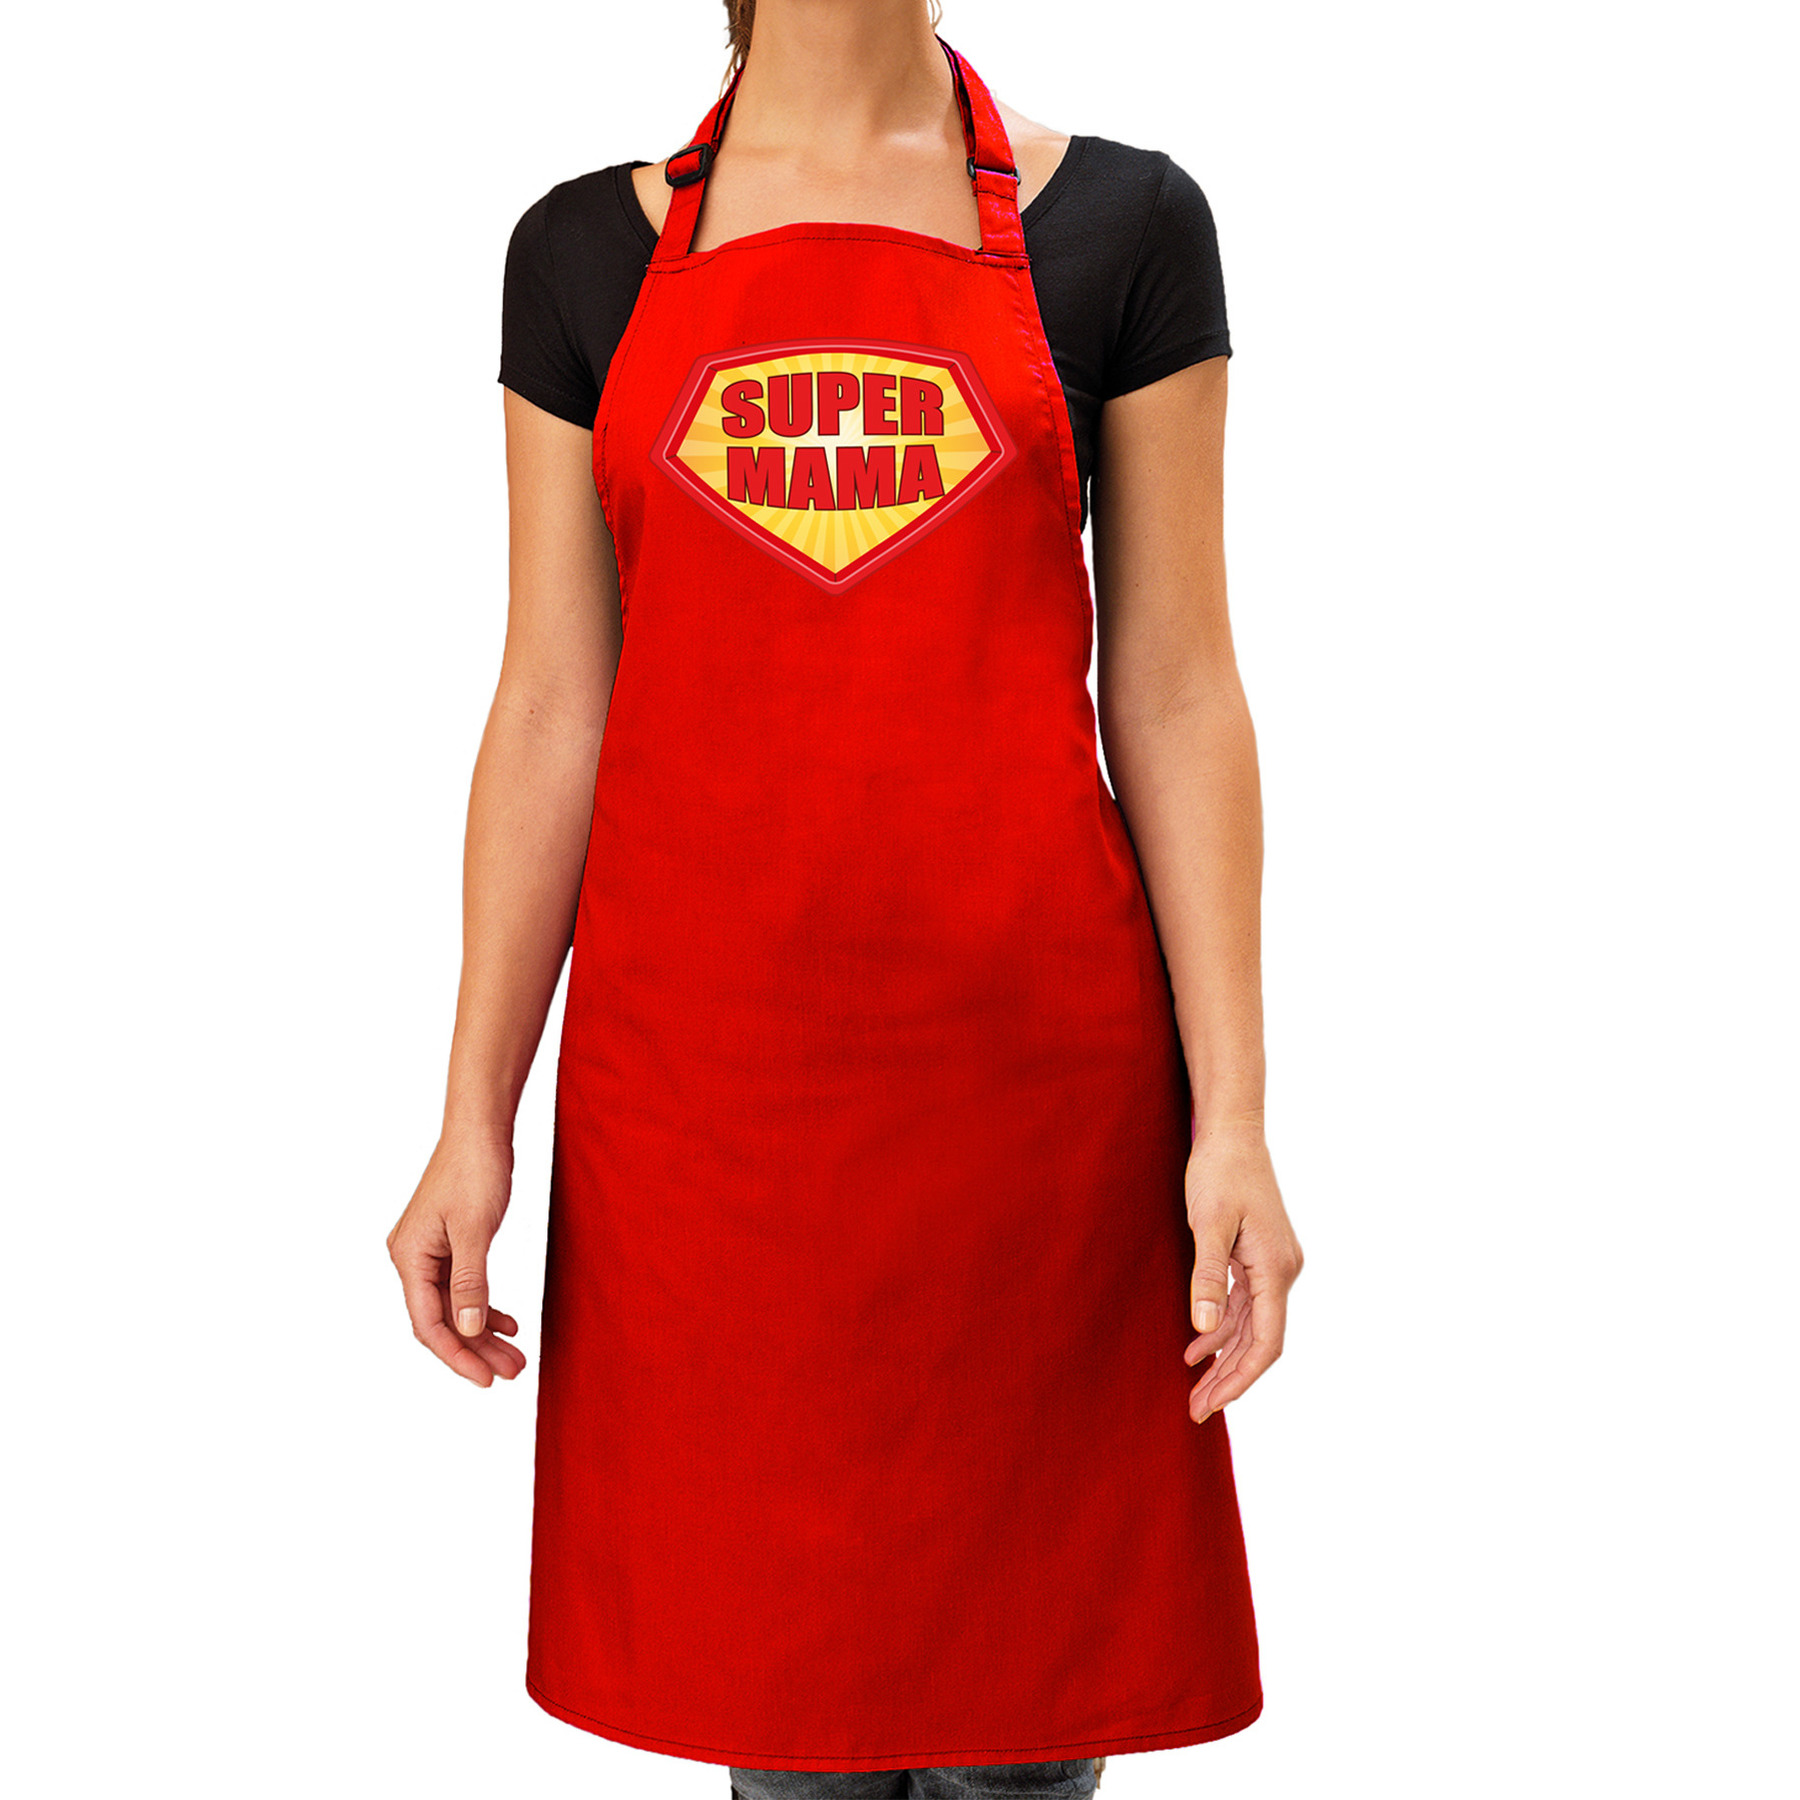 Super mama barbeque schort-keukenschort rood dames